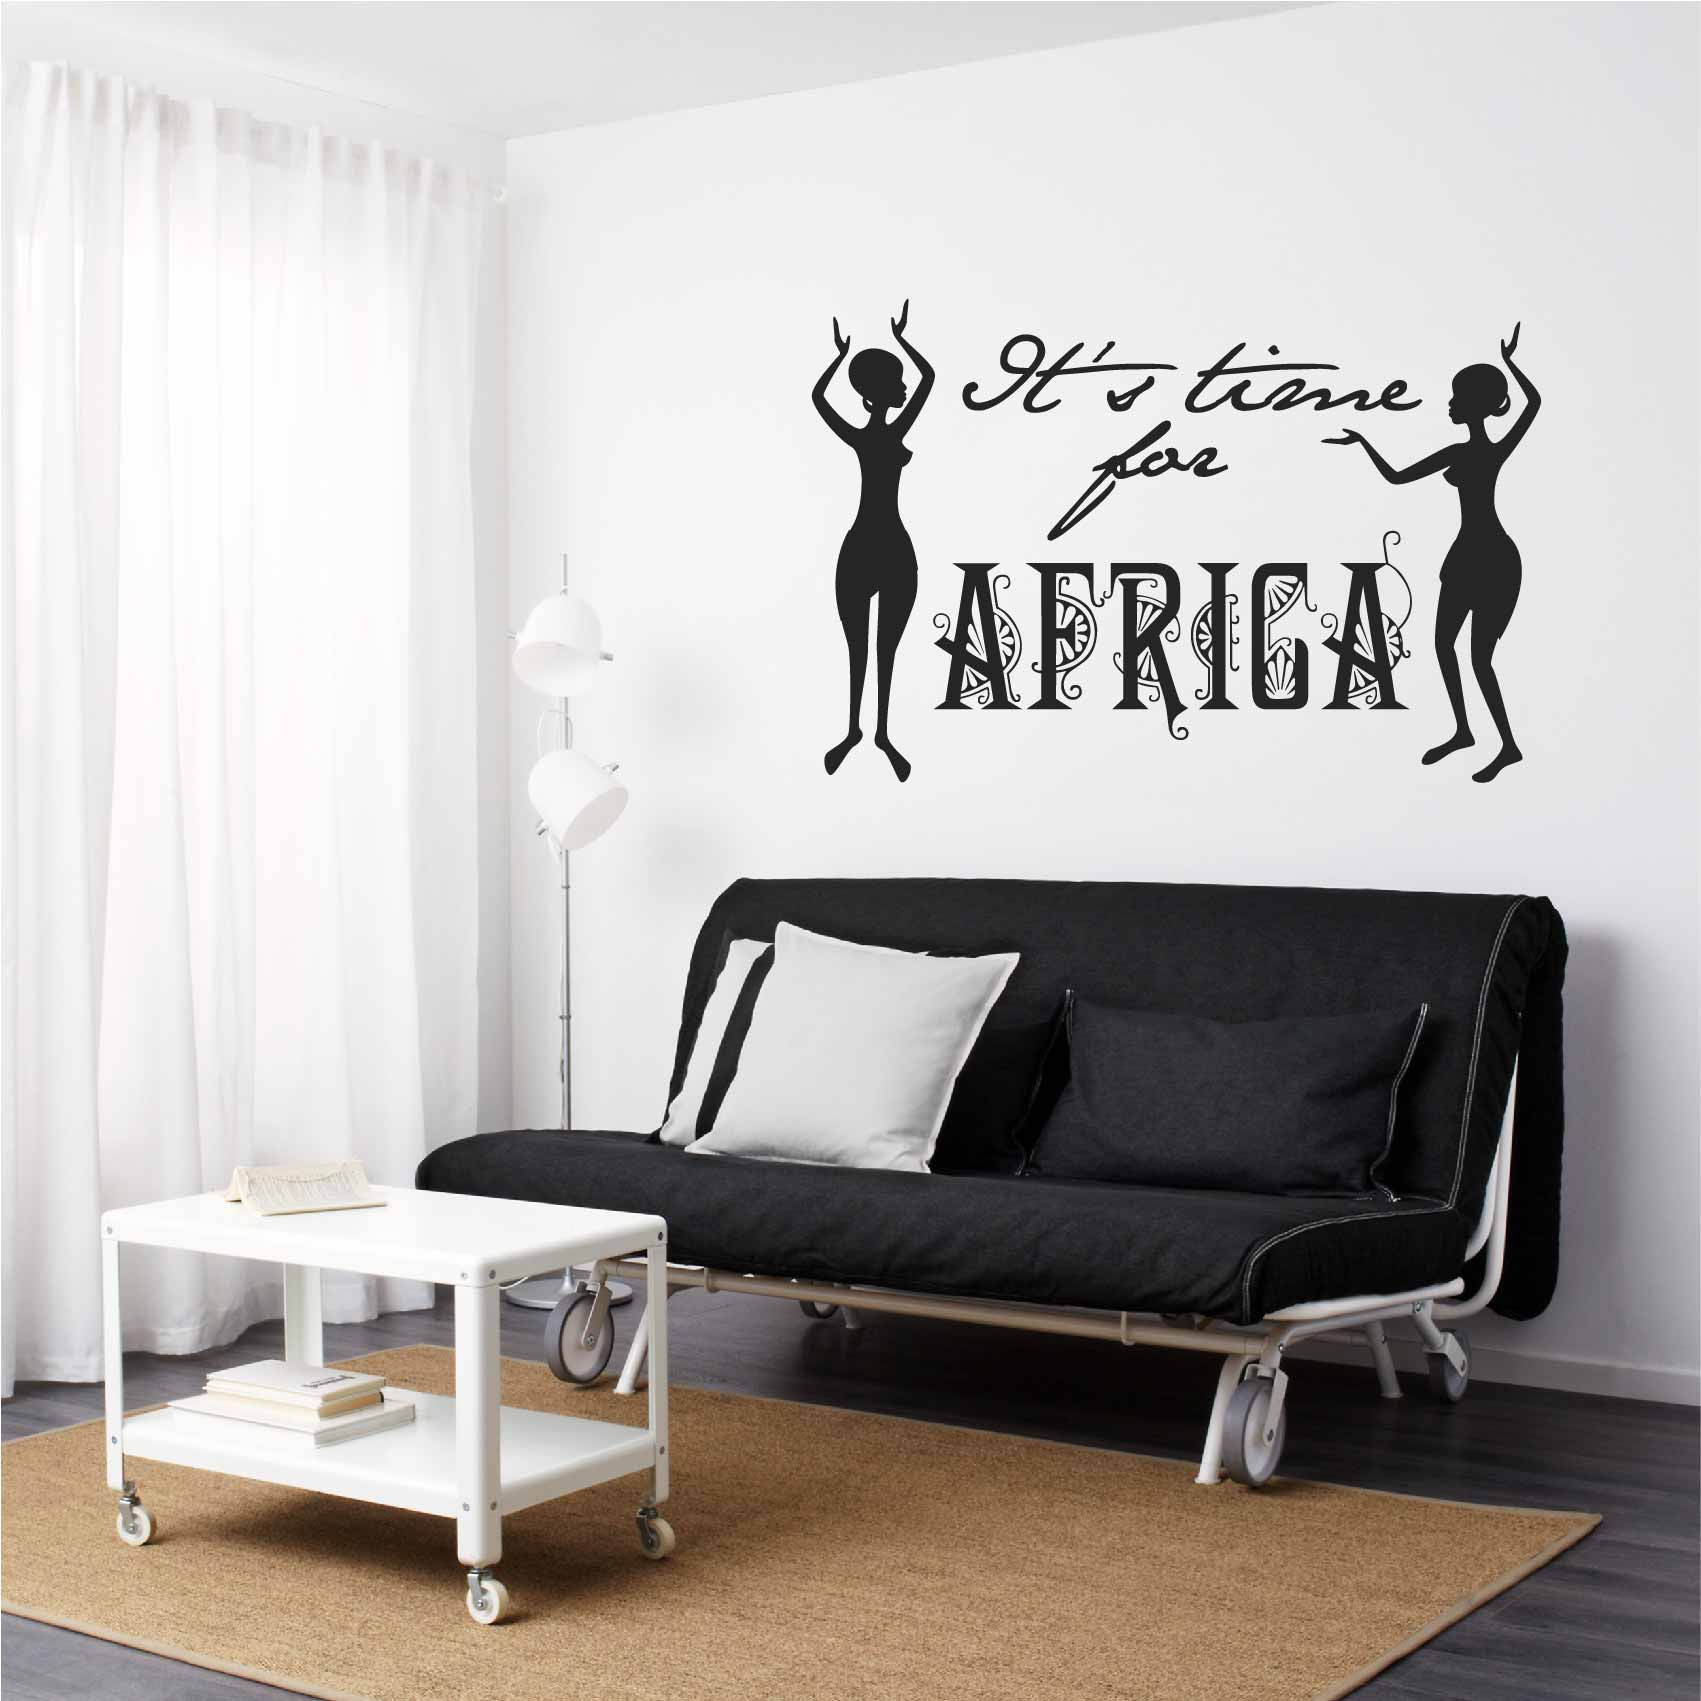 stickers-time-for-africa-ref10afrique-stickers-muraux-afrique-autocollant-deco-mur-salon-chambre-sticker-mural-africa